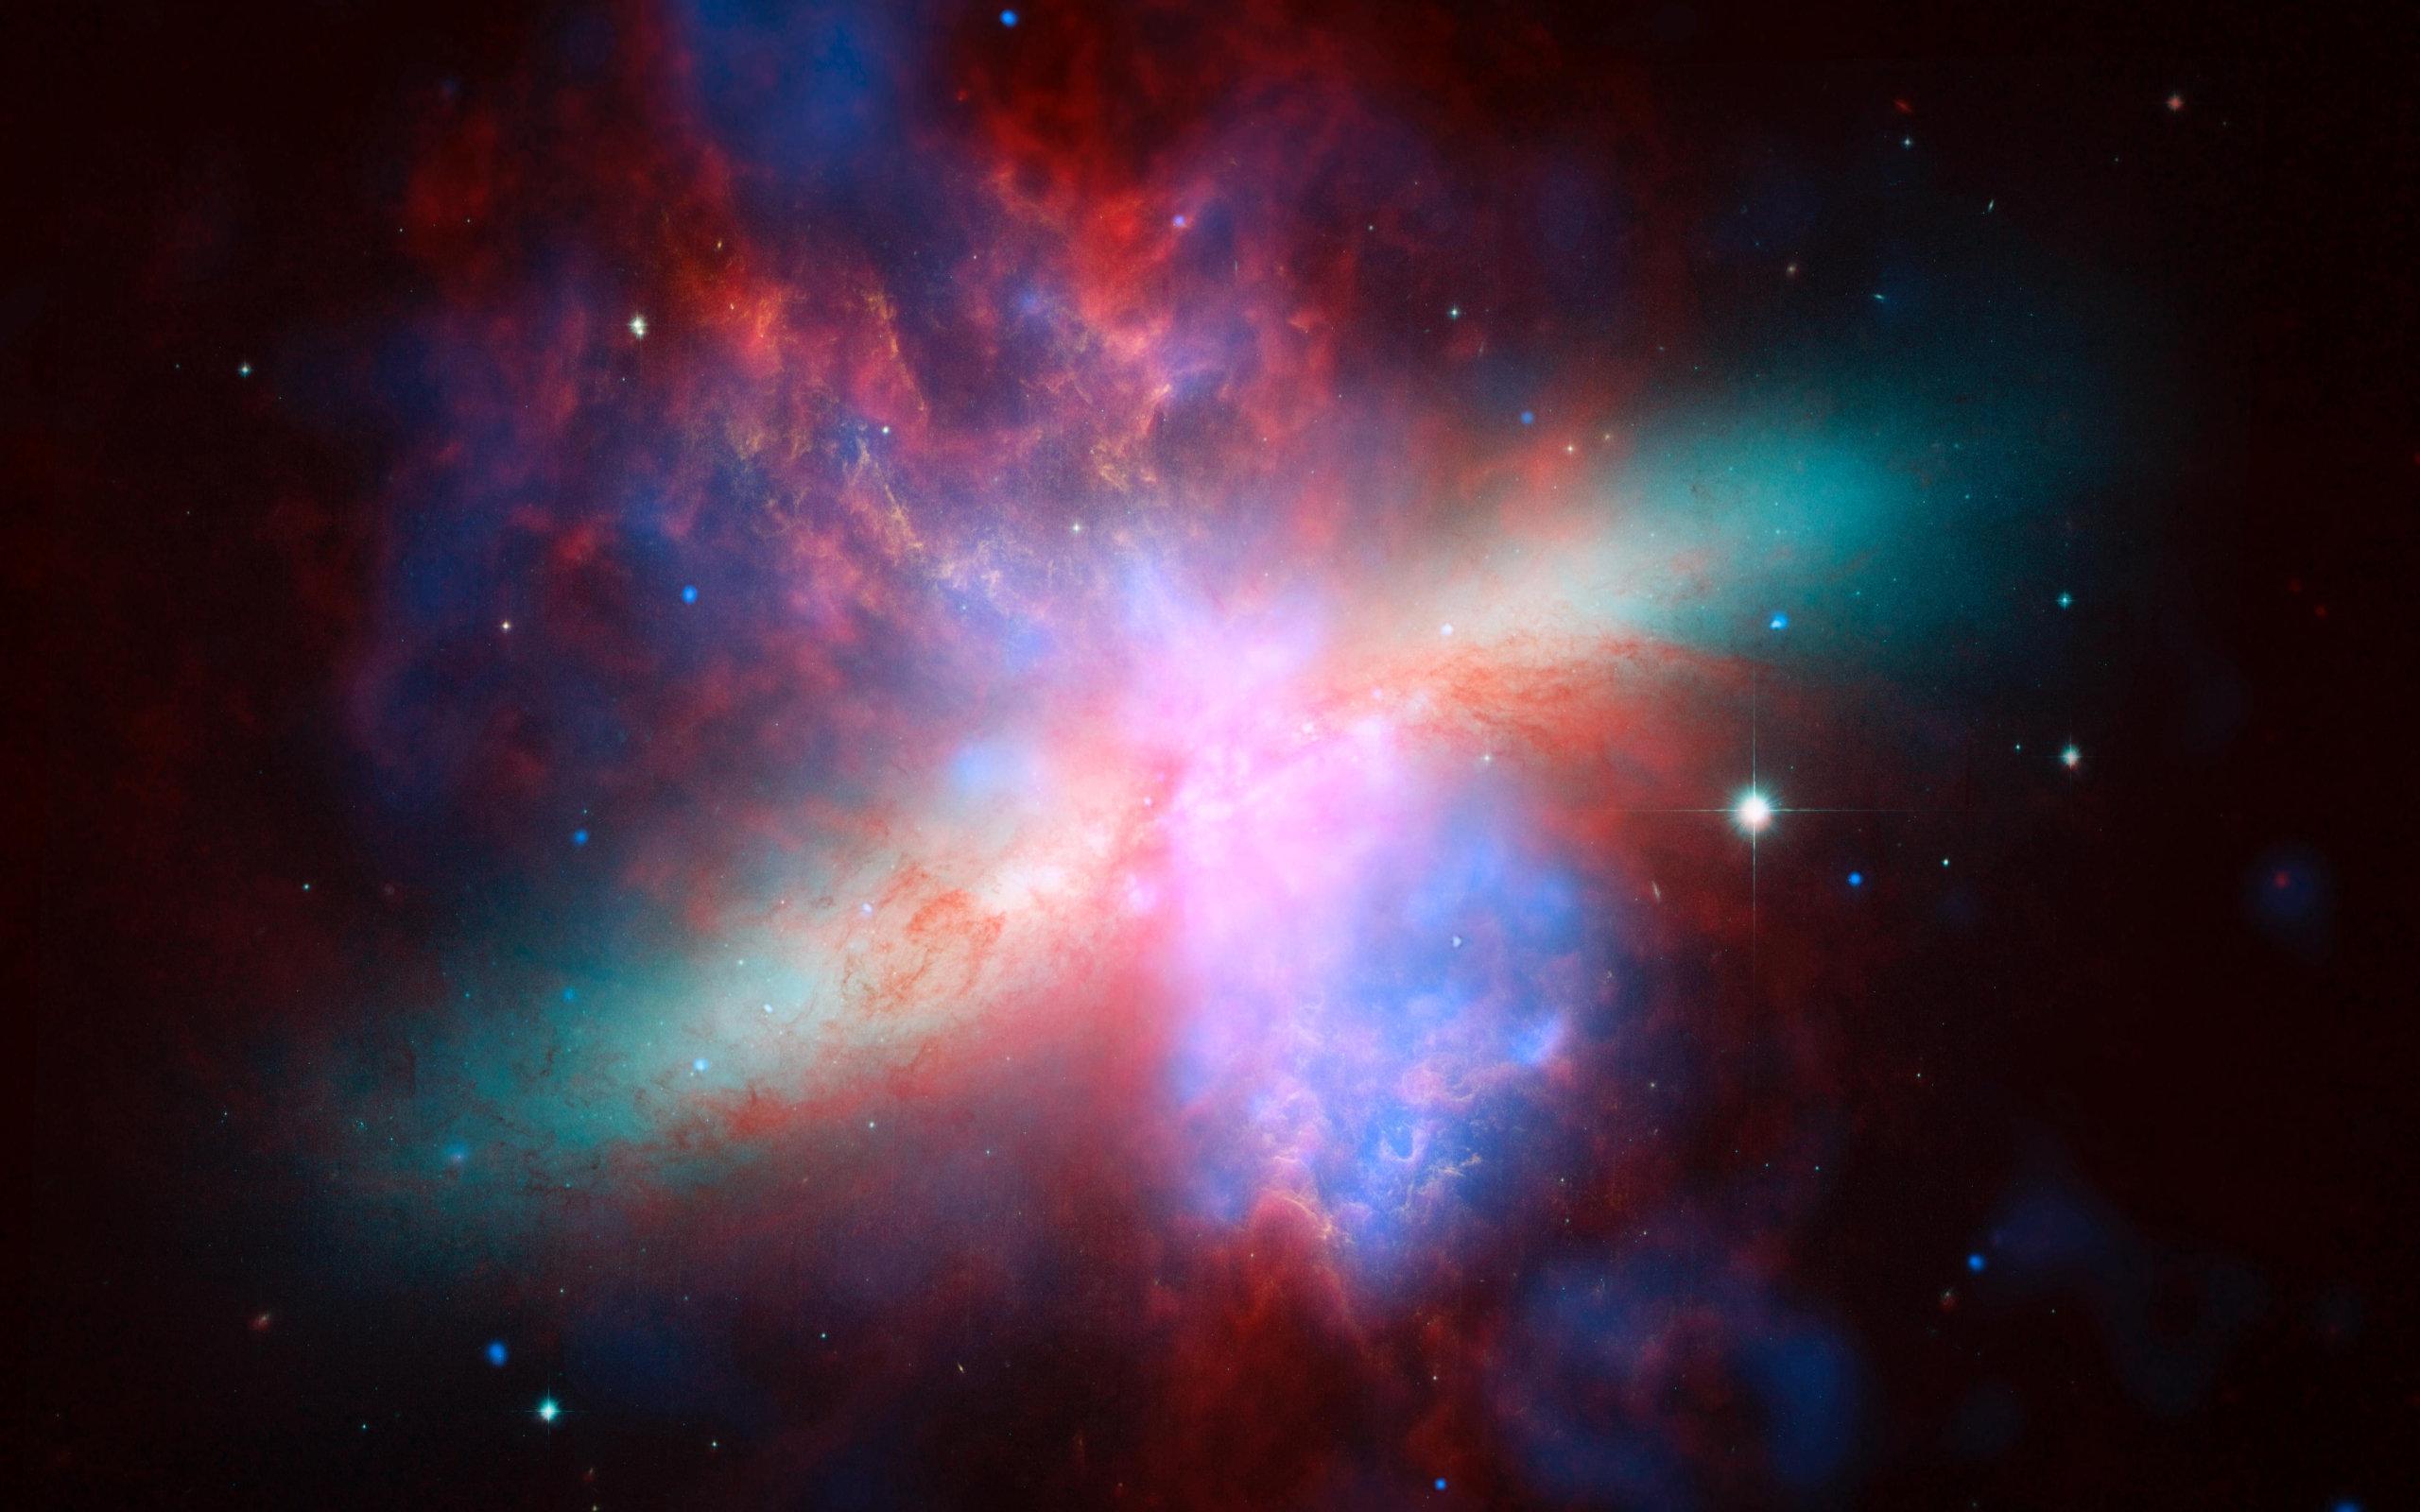 HD Space Nebula Hubble Telescope Wallpaper. Download Free